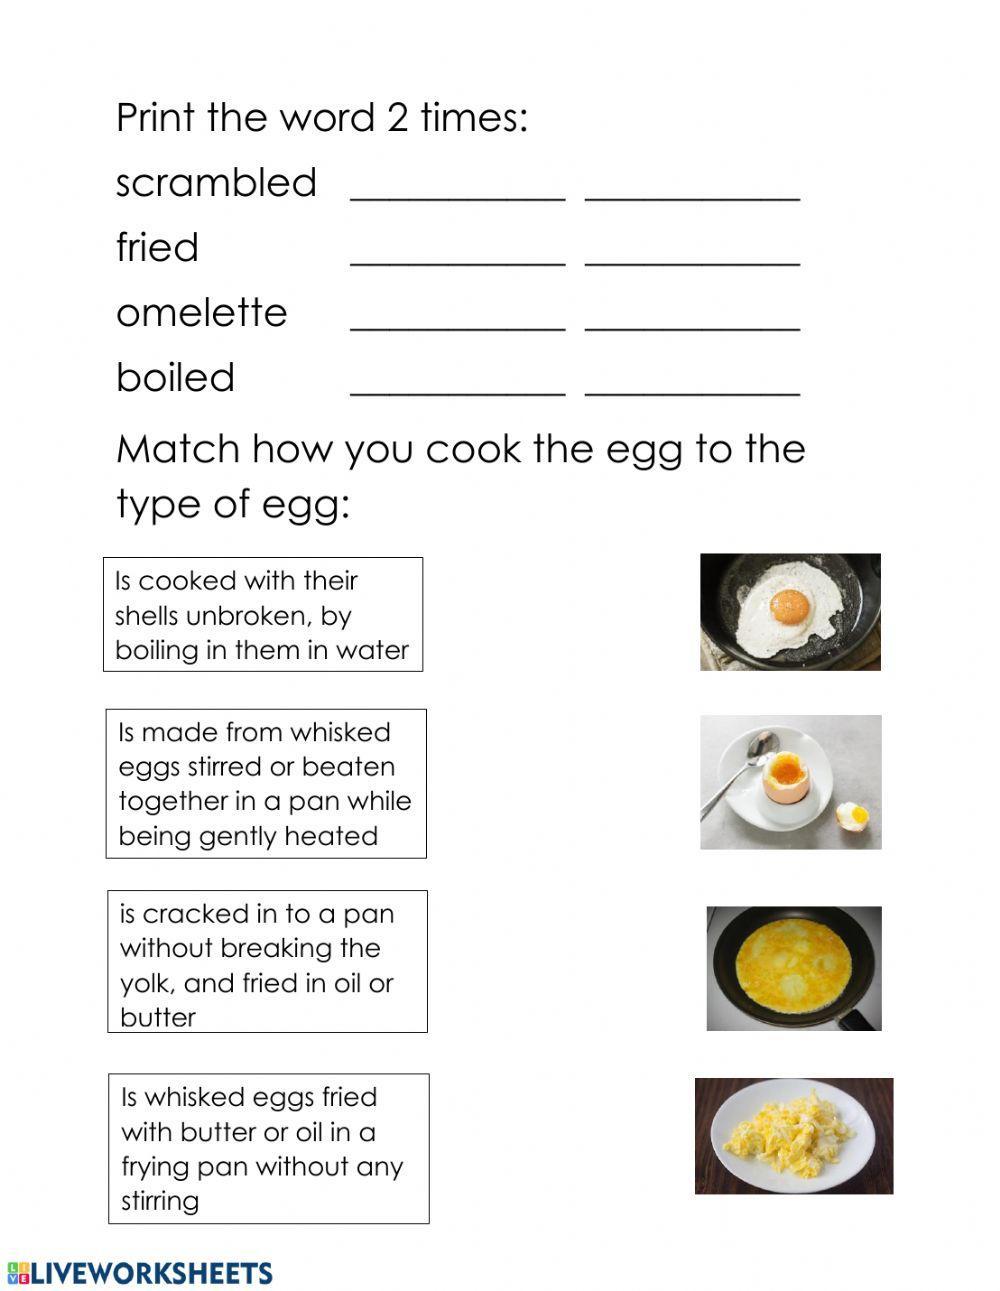 Making Eggs